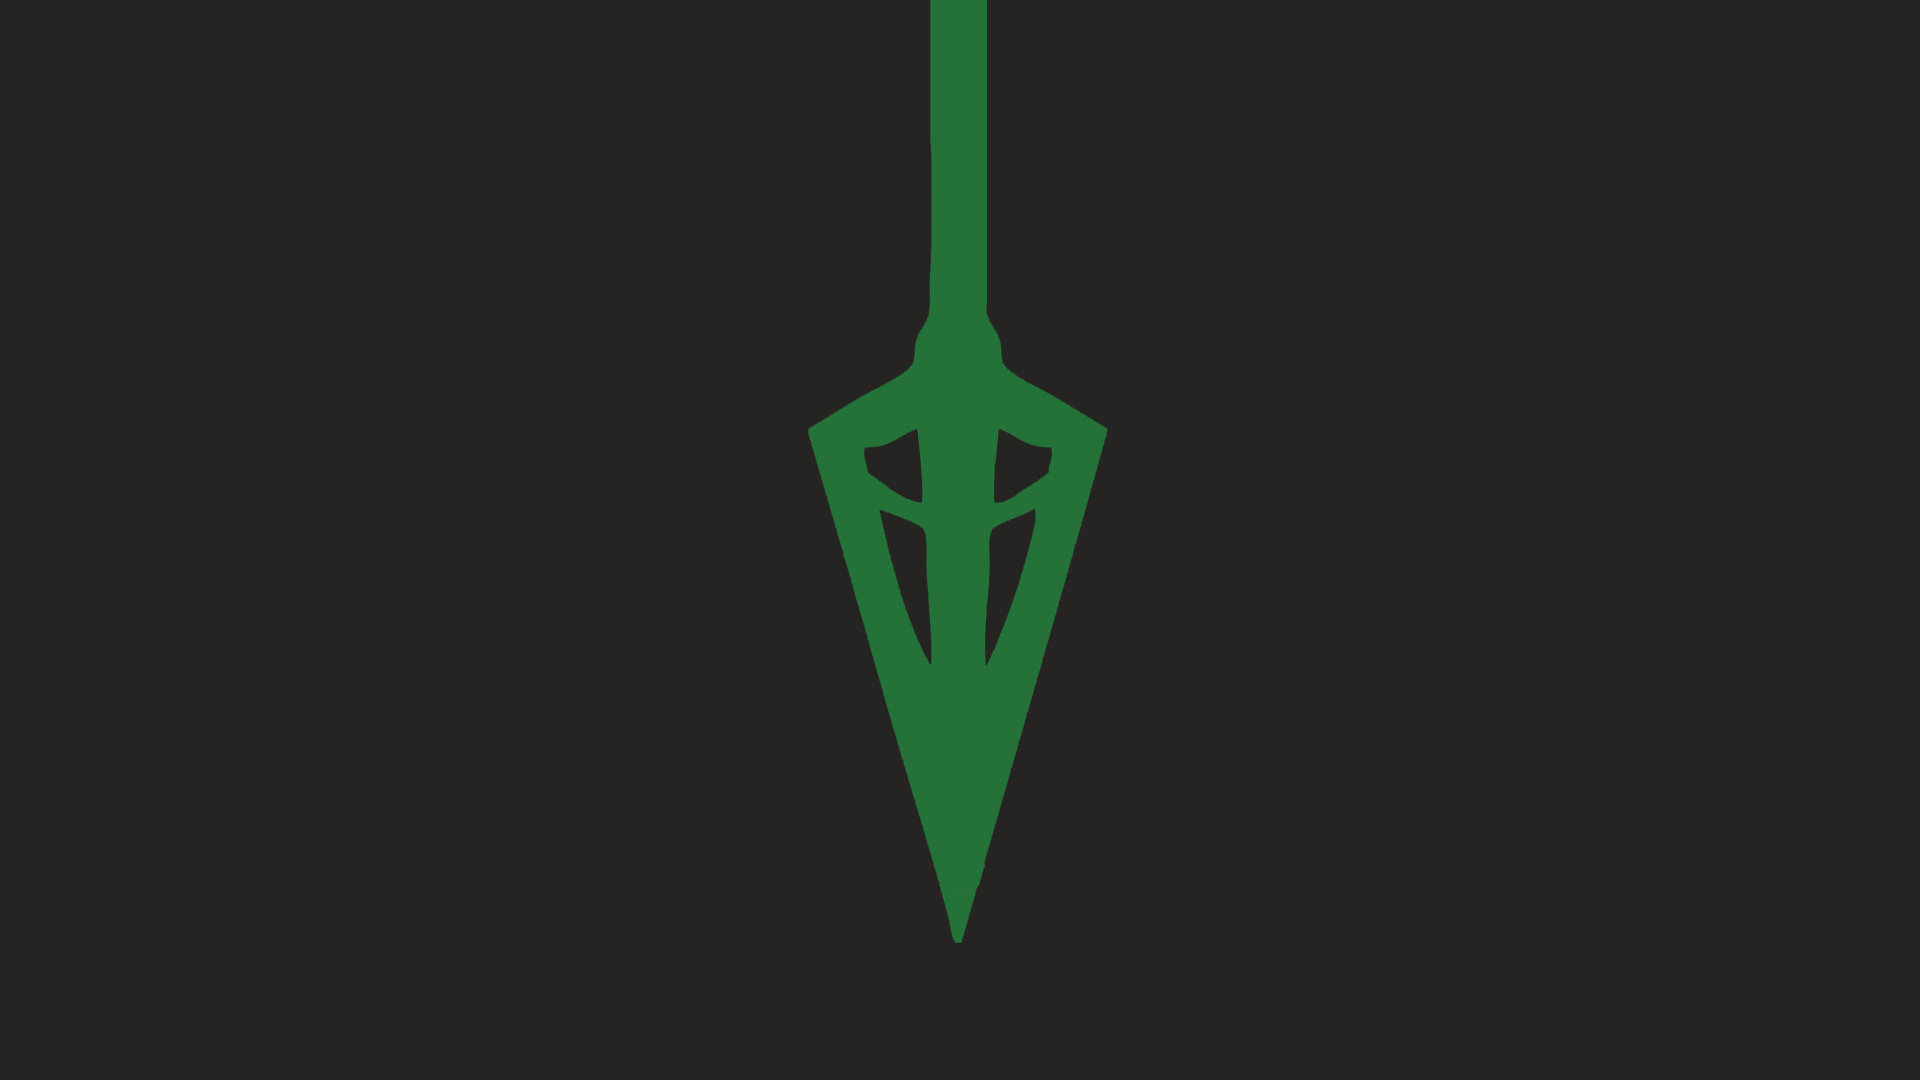 High resolution Green Arrow 1080p wallpaper ID:357952 for computer